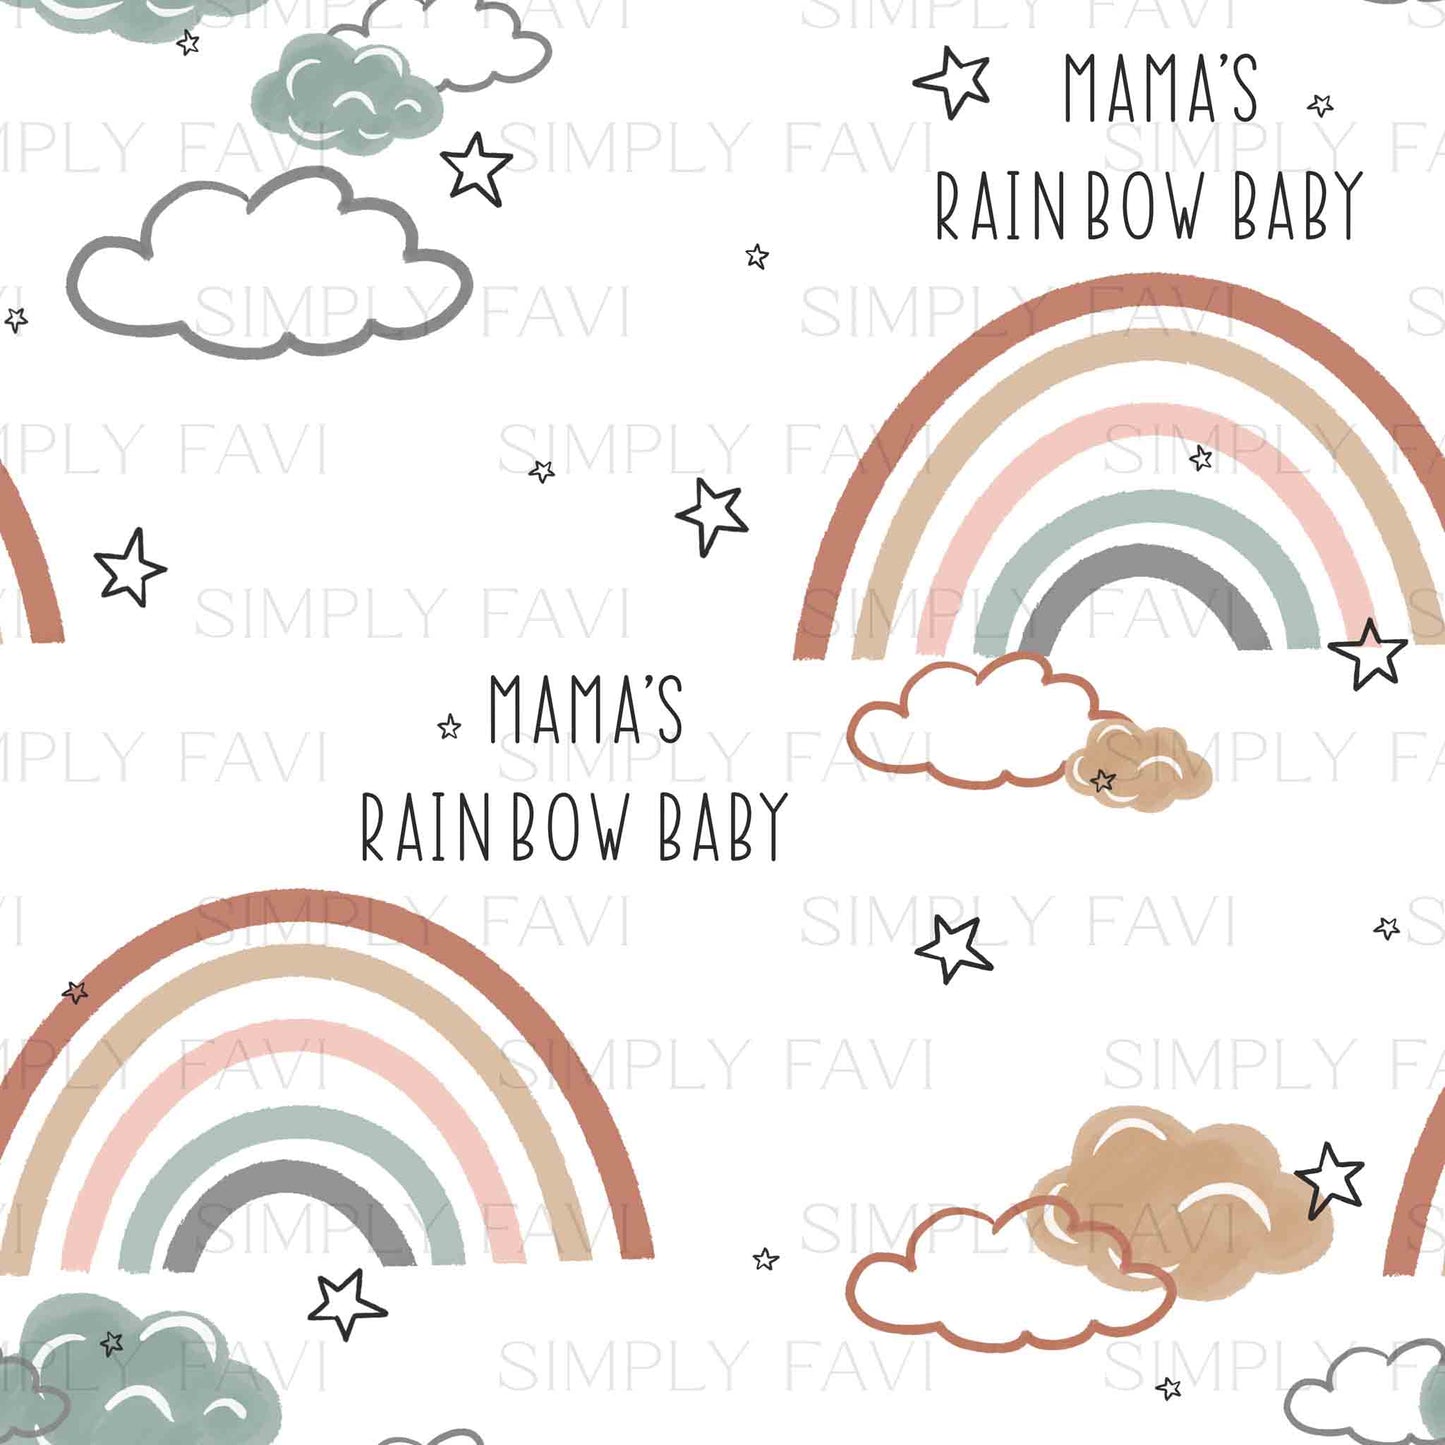 Mama's Rainbow Baby (set of 2)